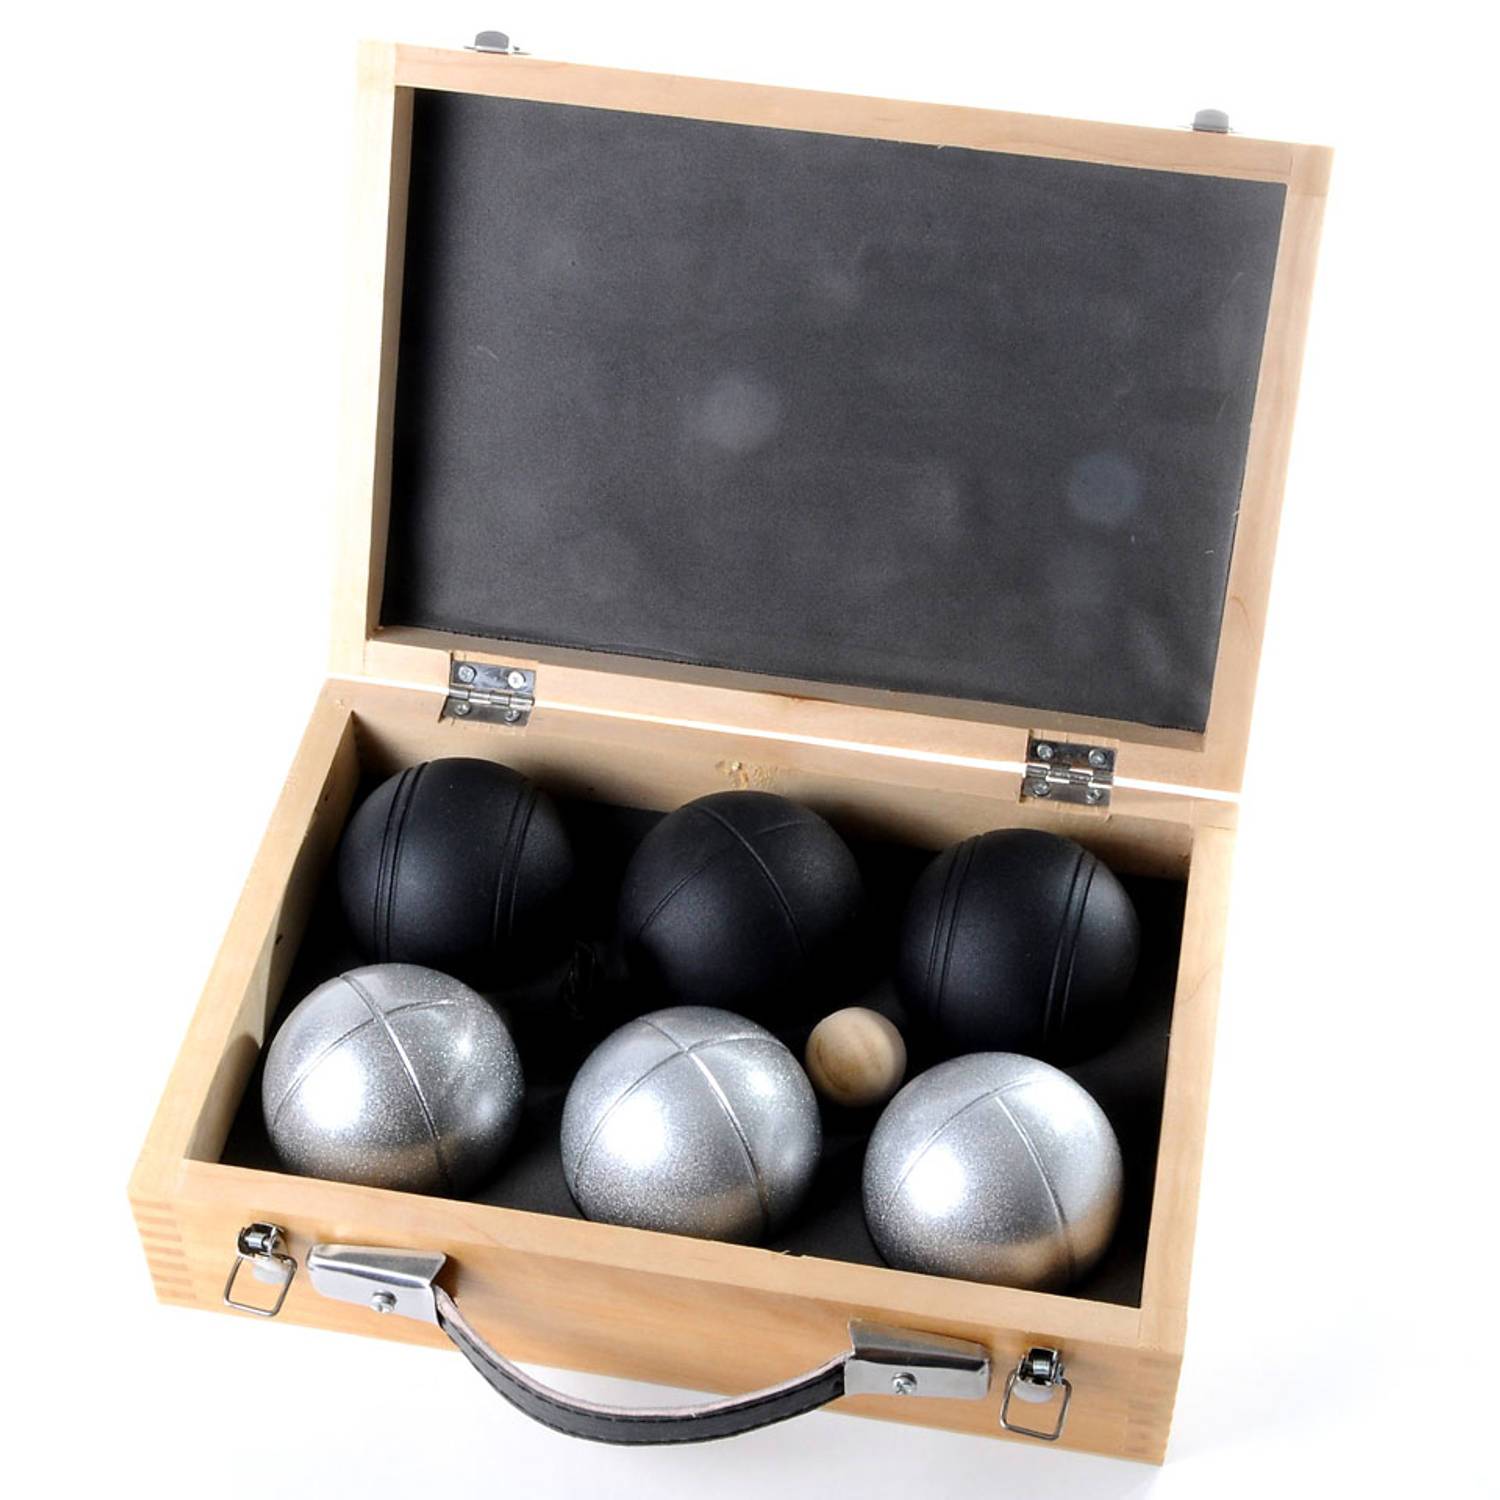 schaamte stem De kerk Angel Sports jeu de boules set in koffer - 6 stuks - zwart/zilver | Blokker